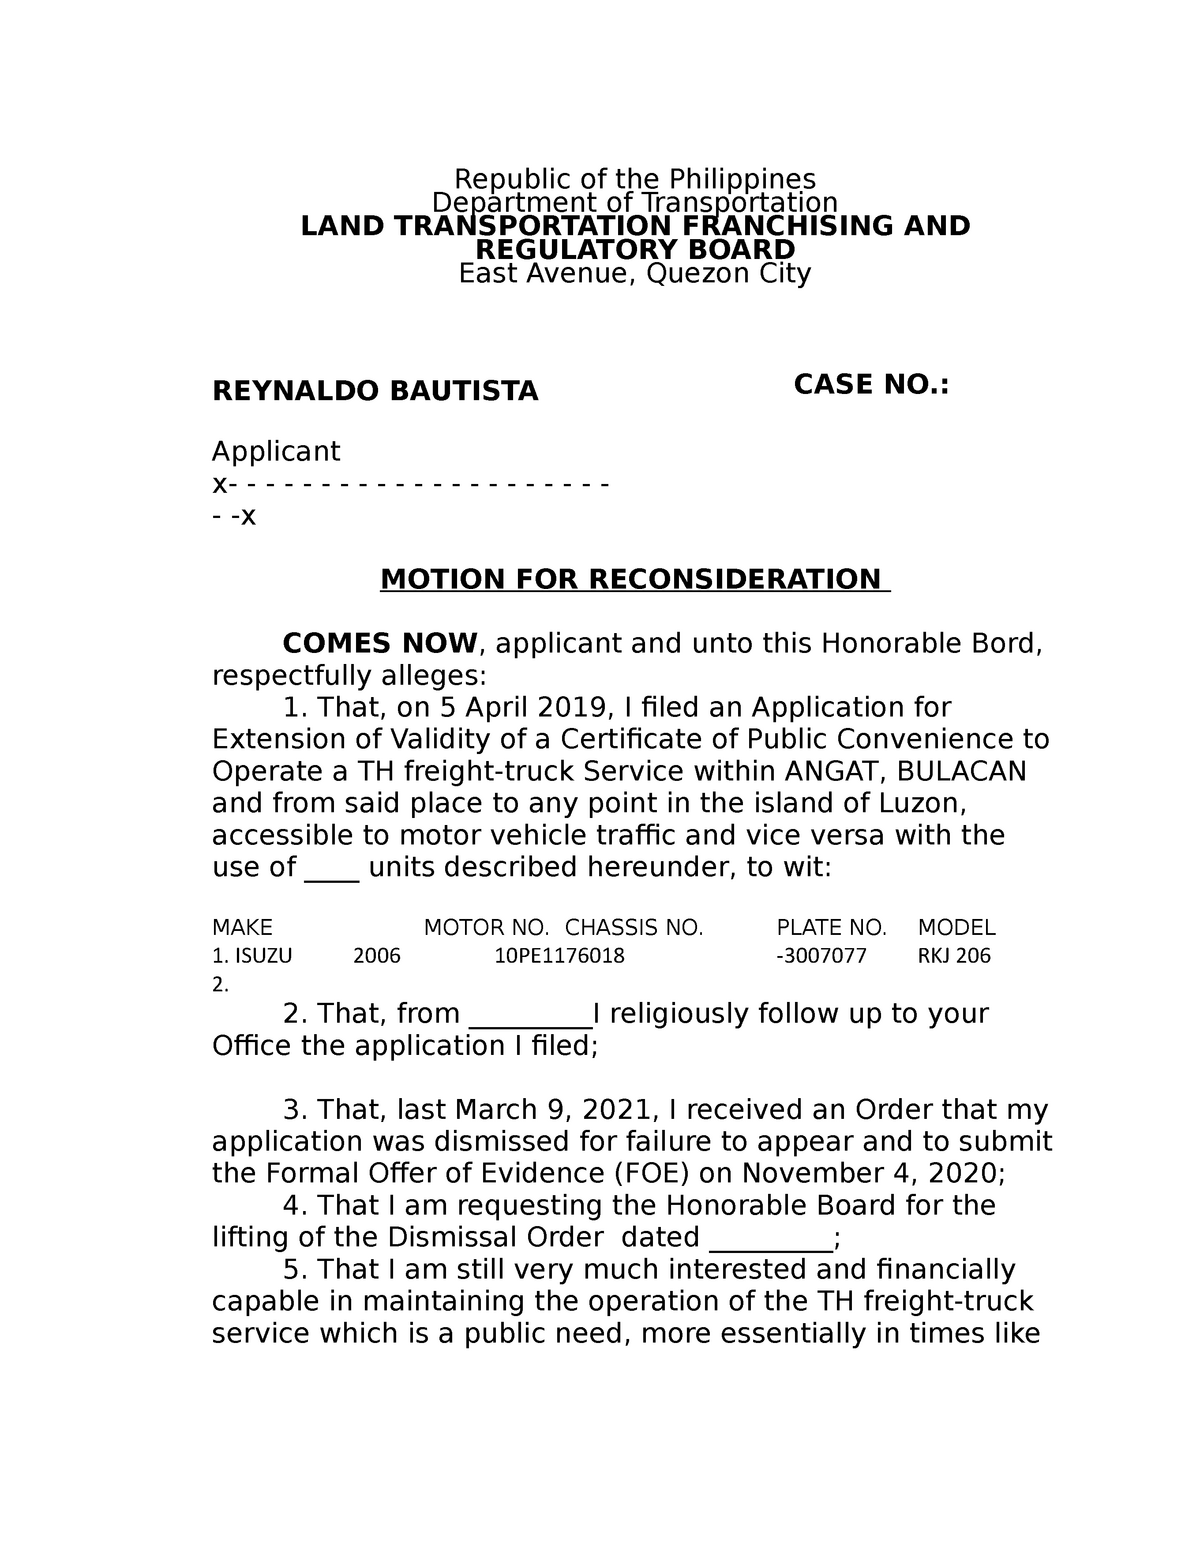 Sample motion for reconsideration florida healthcarebetta